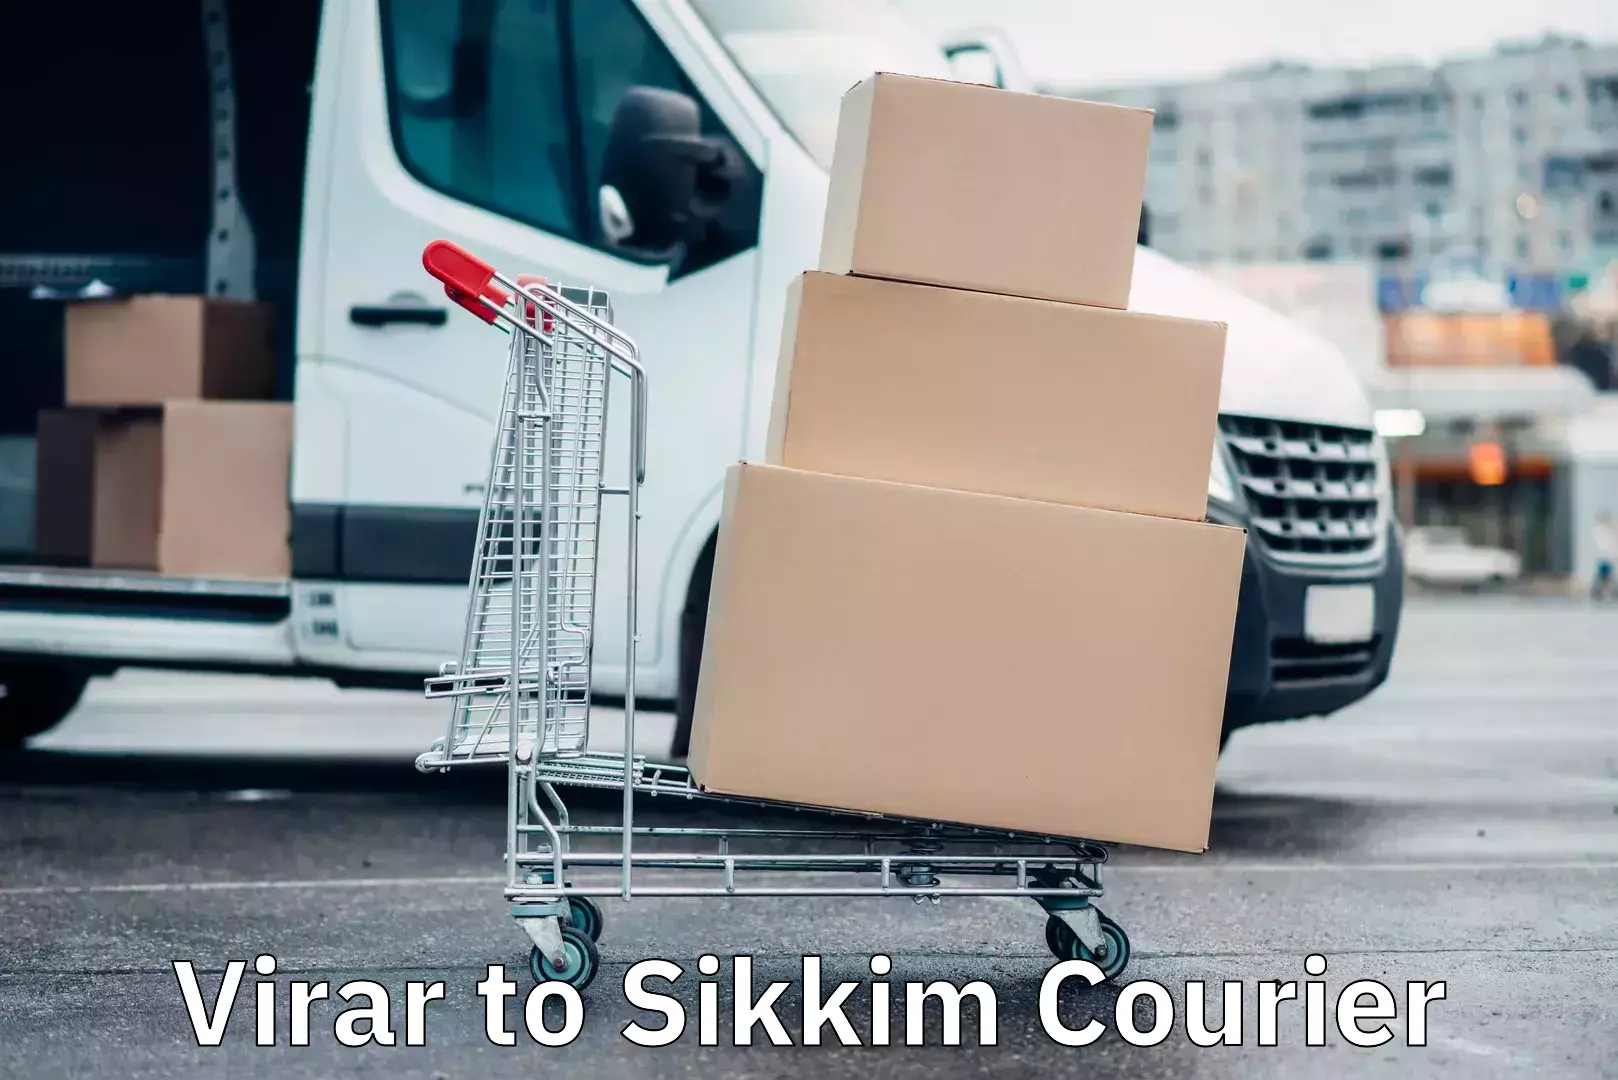 24/7 courier service Virar to Sikkim